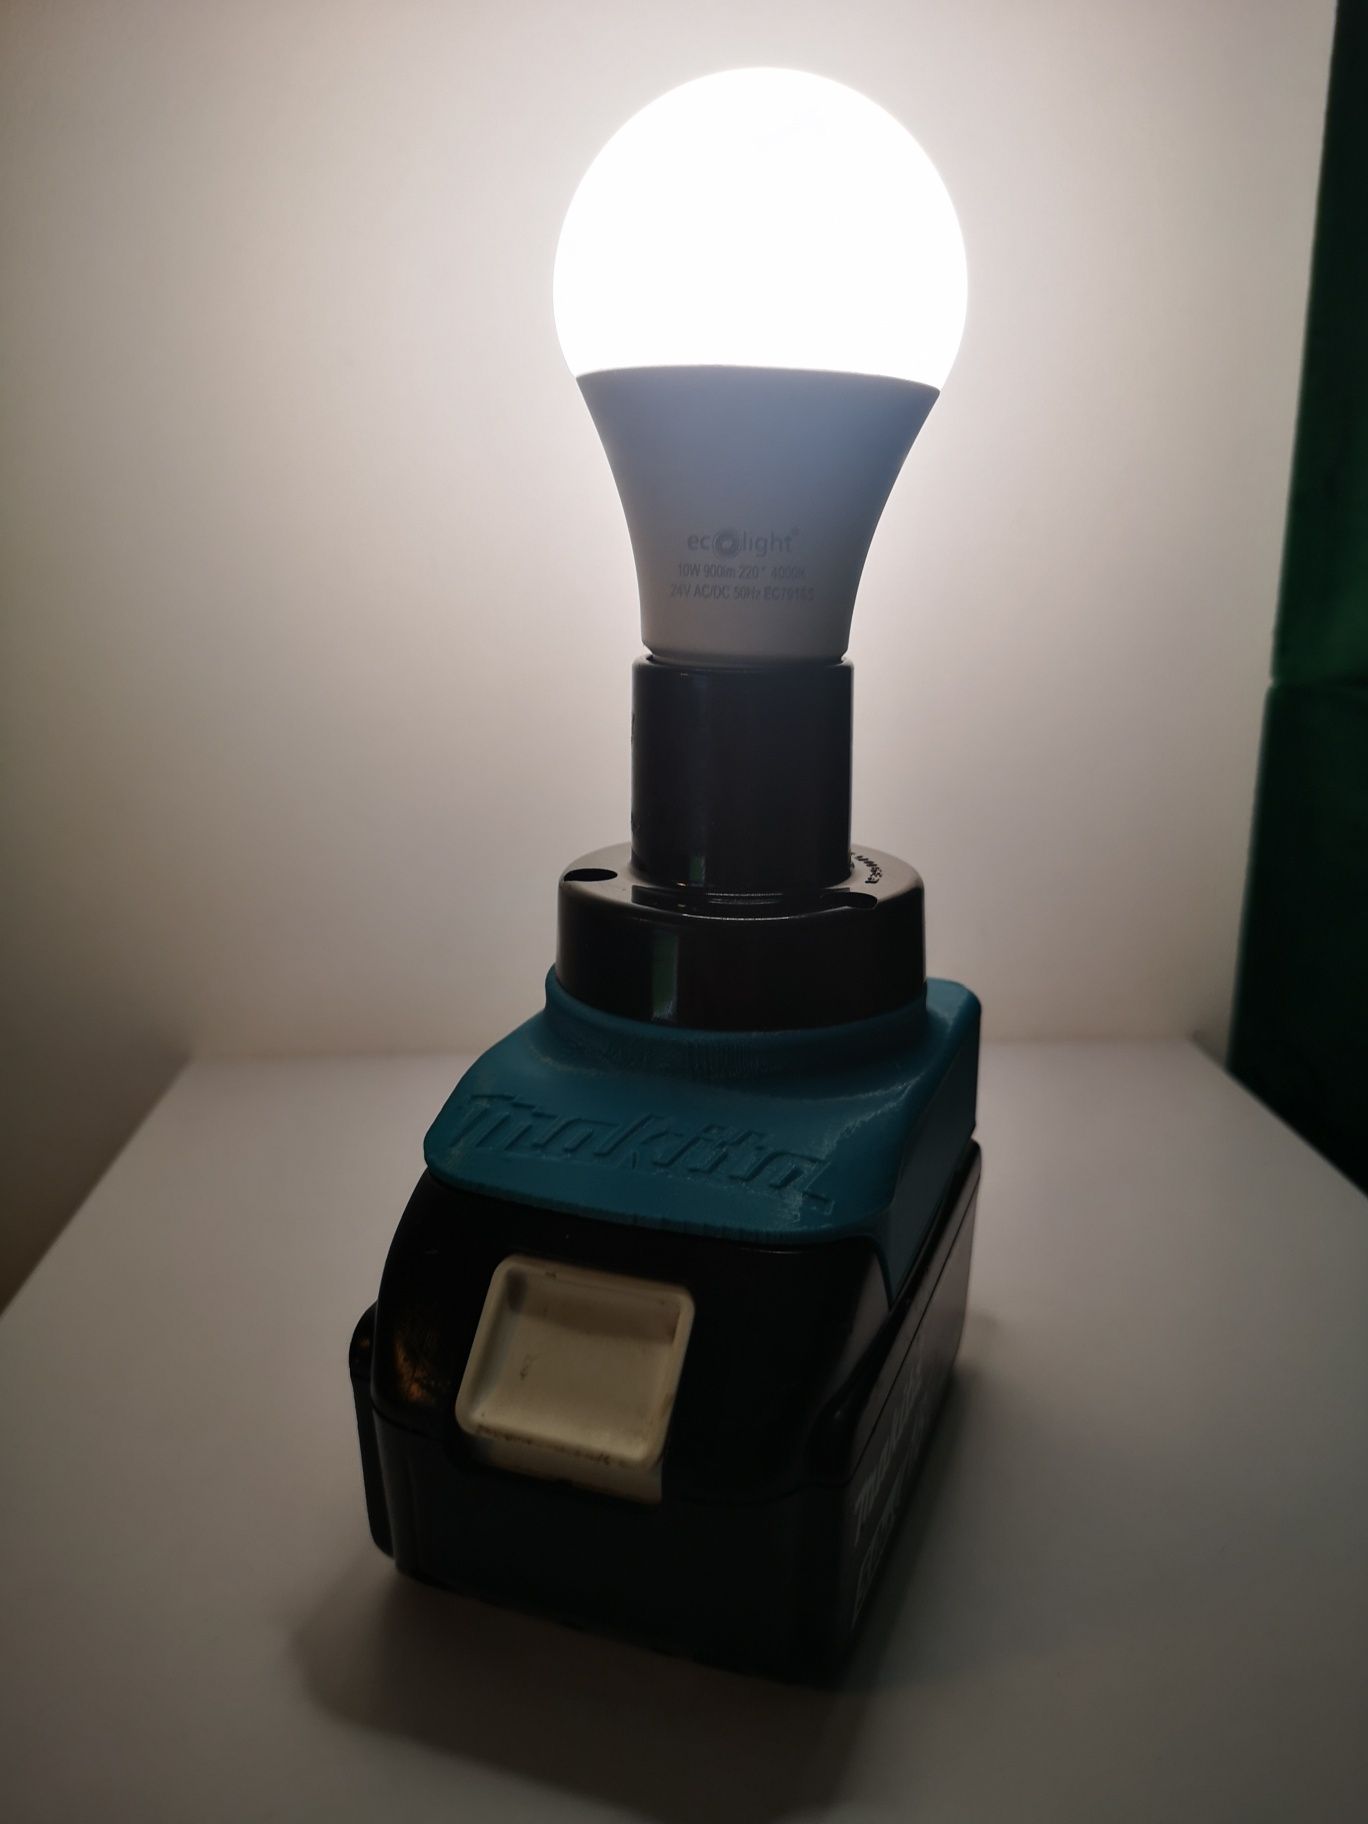 Makita 18v Lxt Lampa na żarówkę e27 z adapterem do akumulatorów